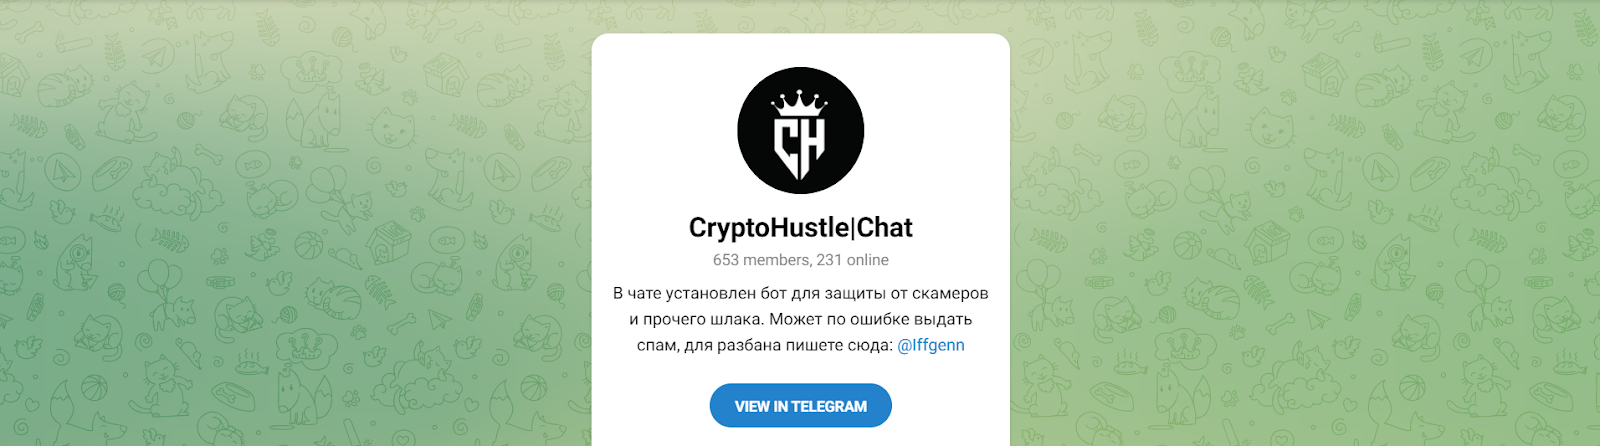 cryptohustle telegram